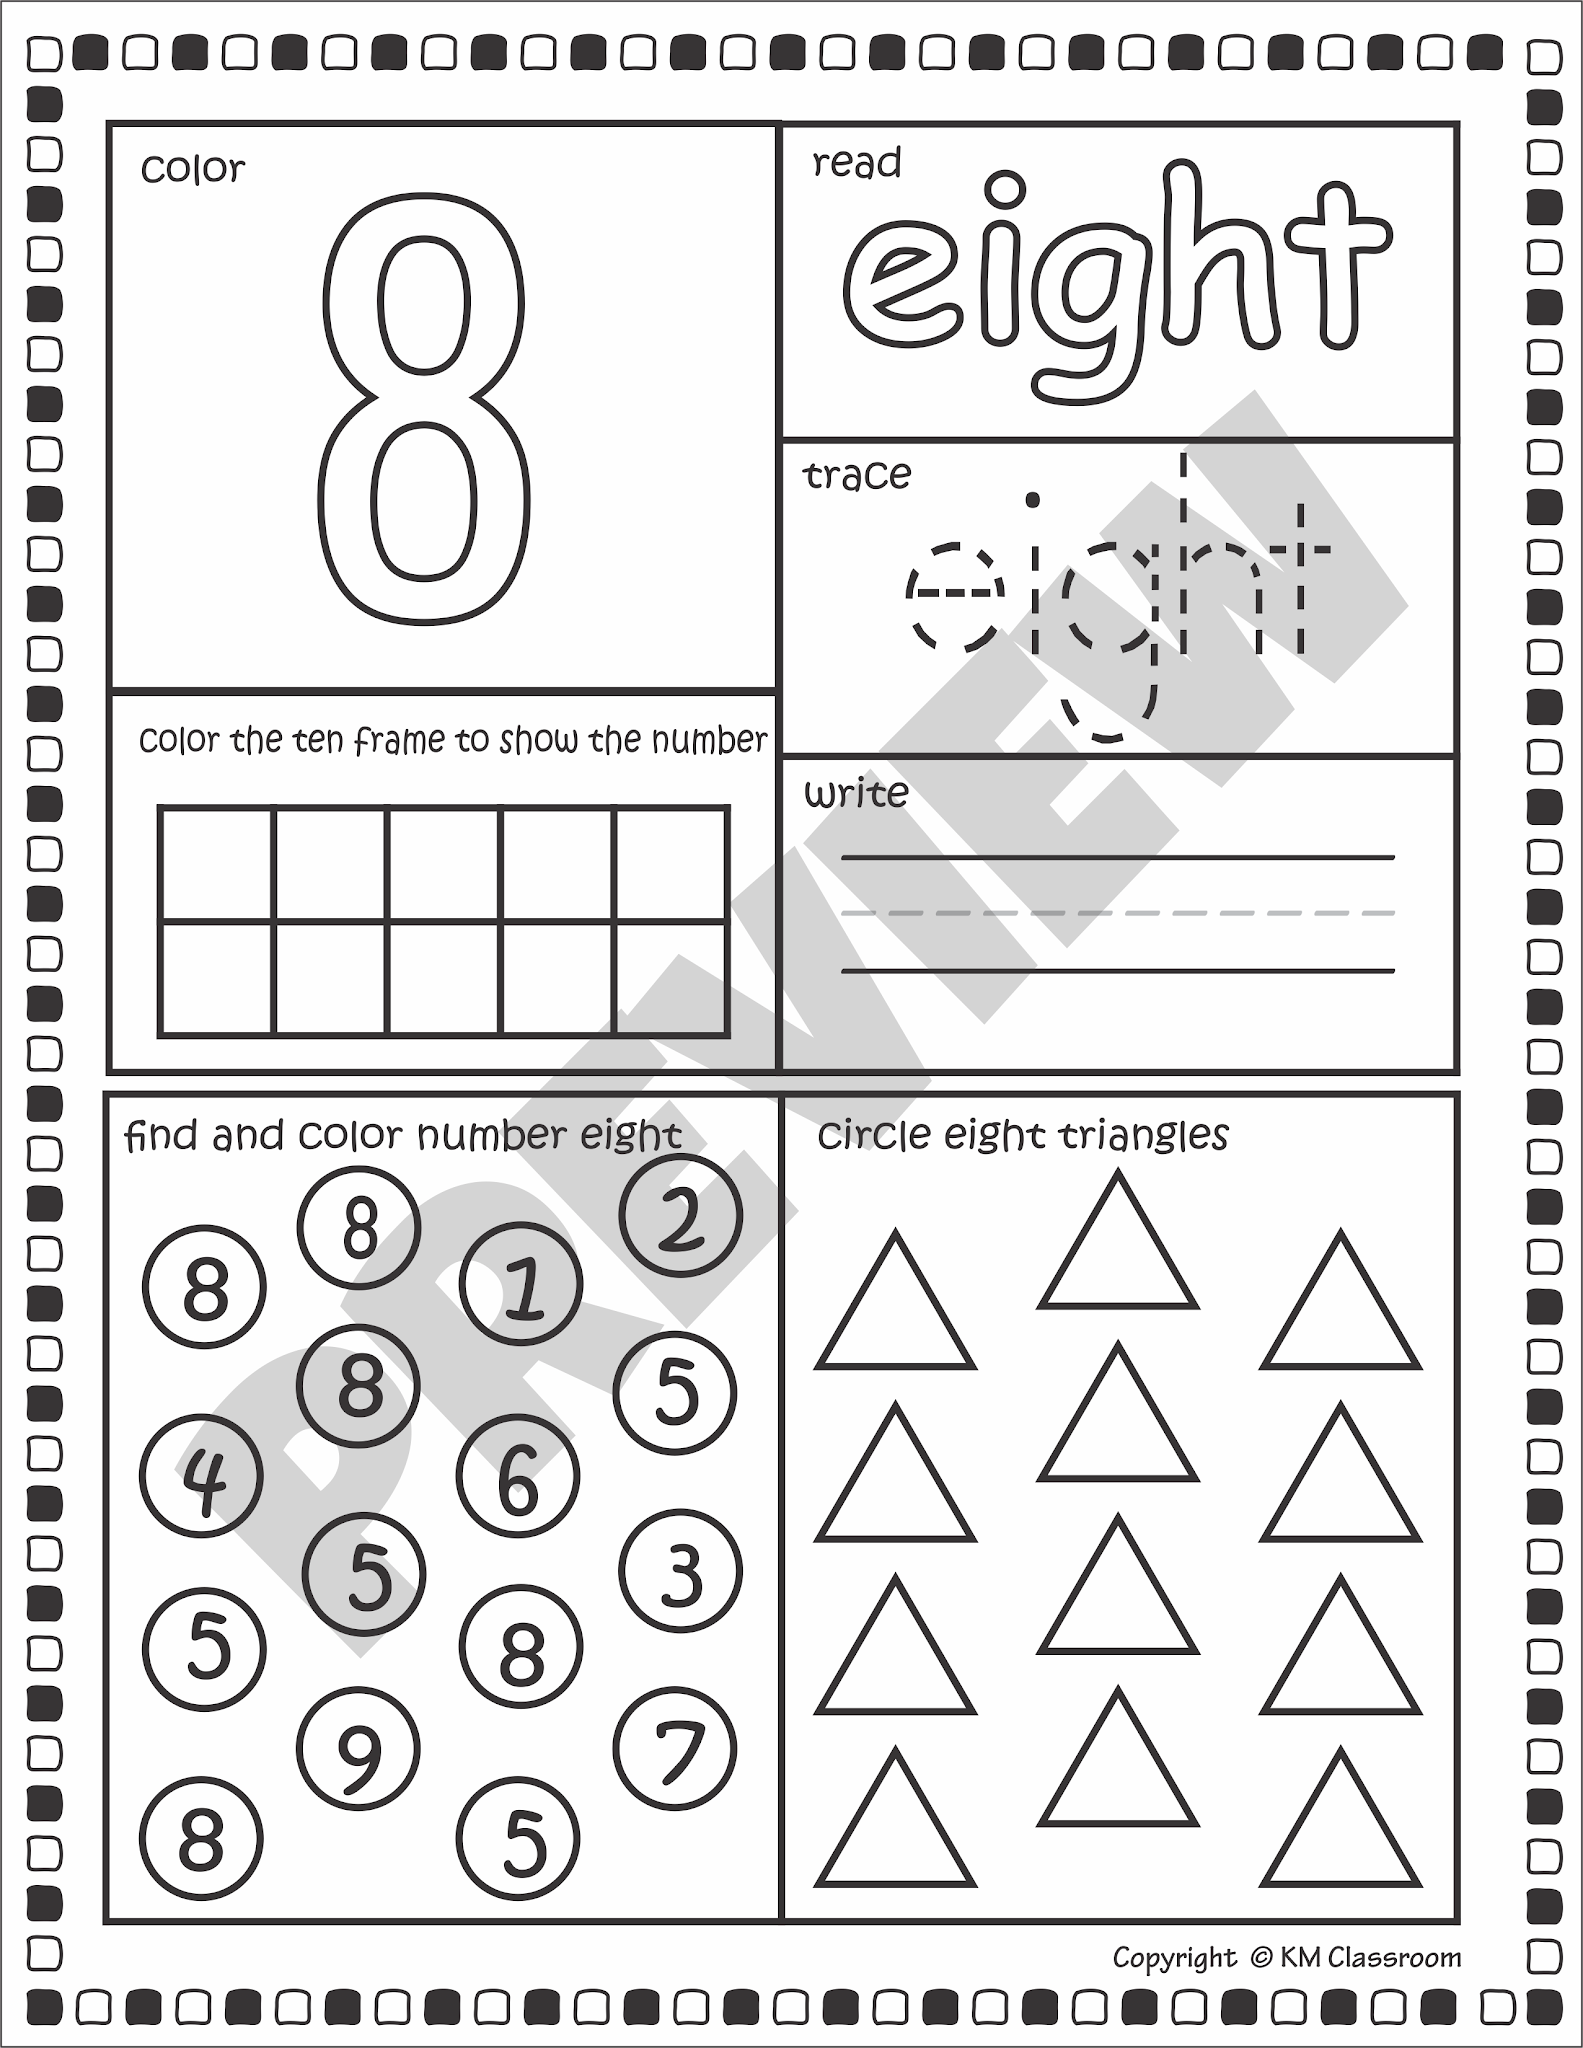 free preschool kindergarten math worksheets 4ac - preschool number worksheets 1 10 by every little adventure tpt | preschool worksheets numbers 1-10